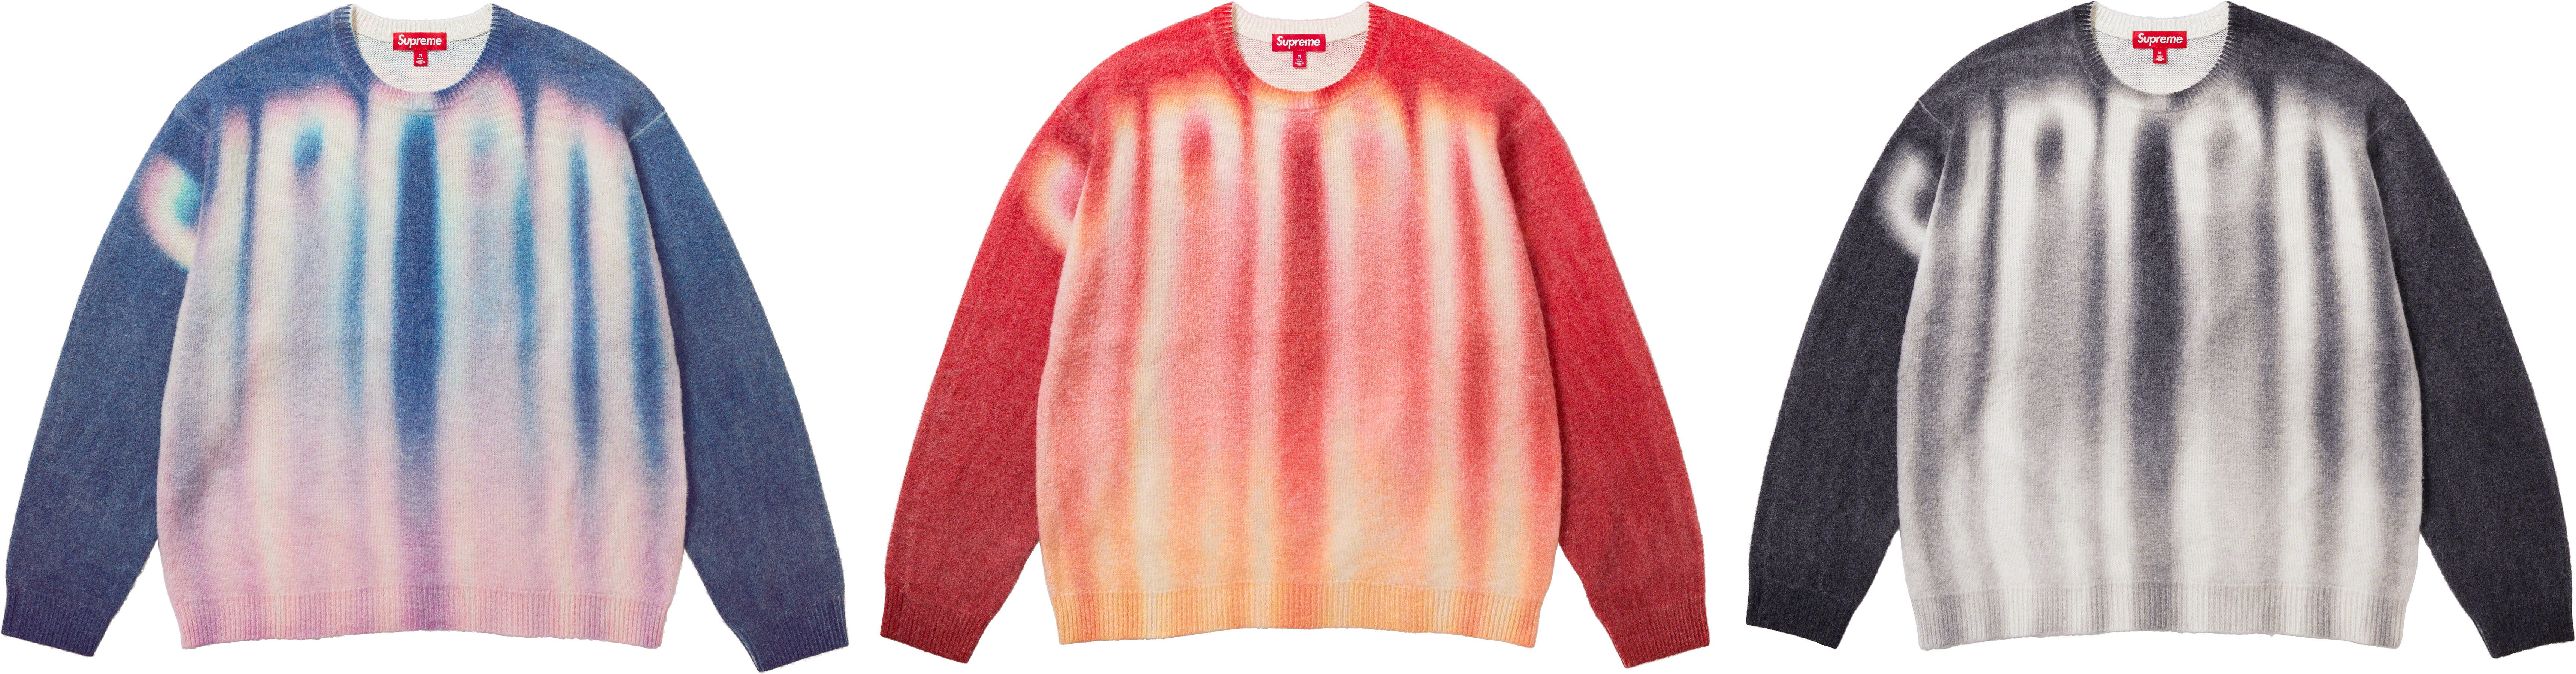 Supreme Blurred Logo Sweater red Lサイズ - ニット/セーター